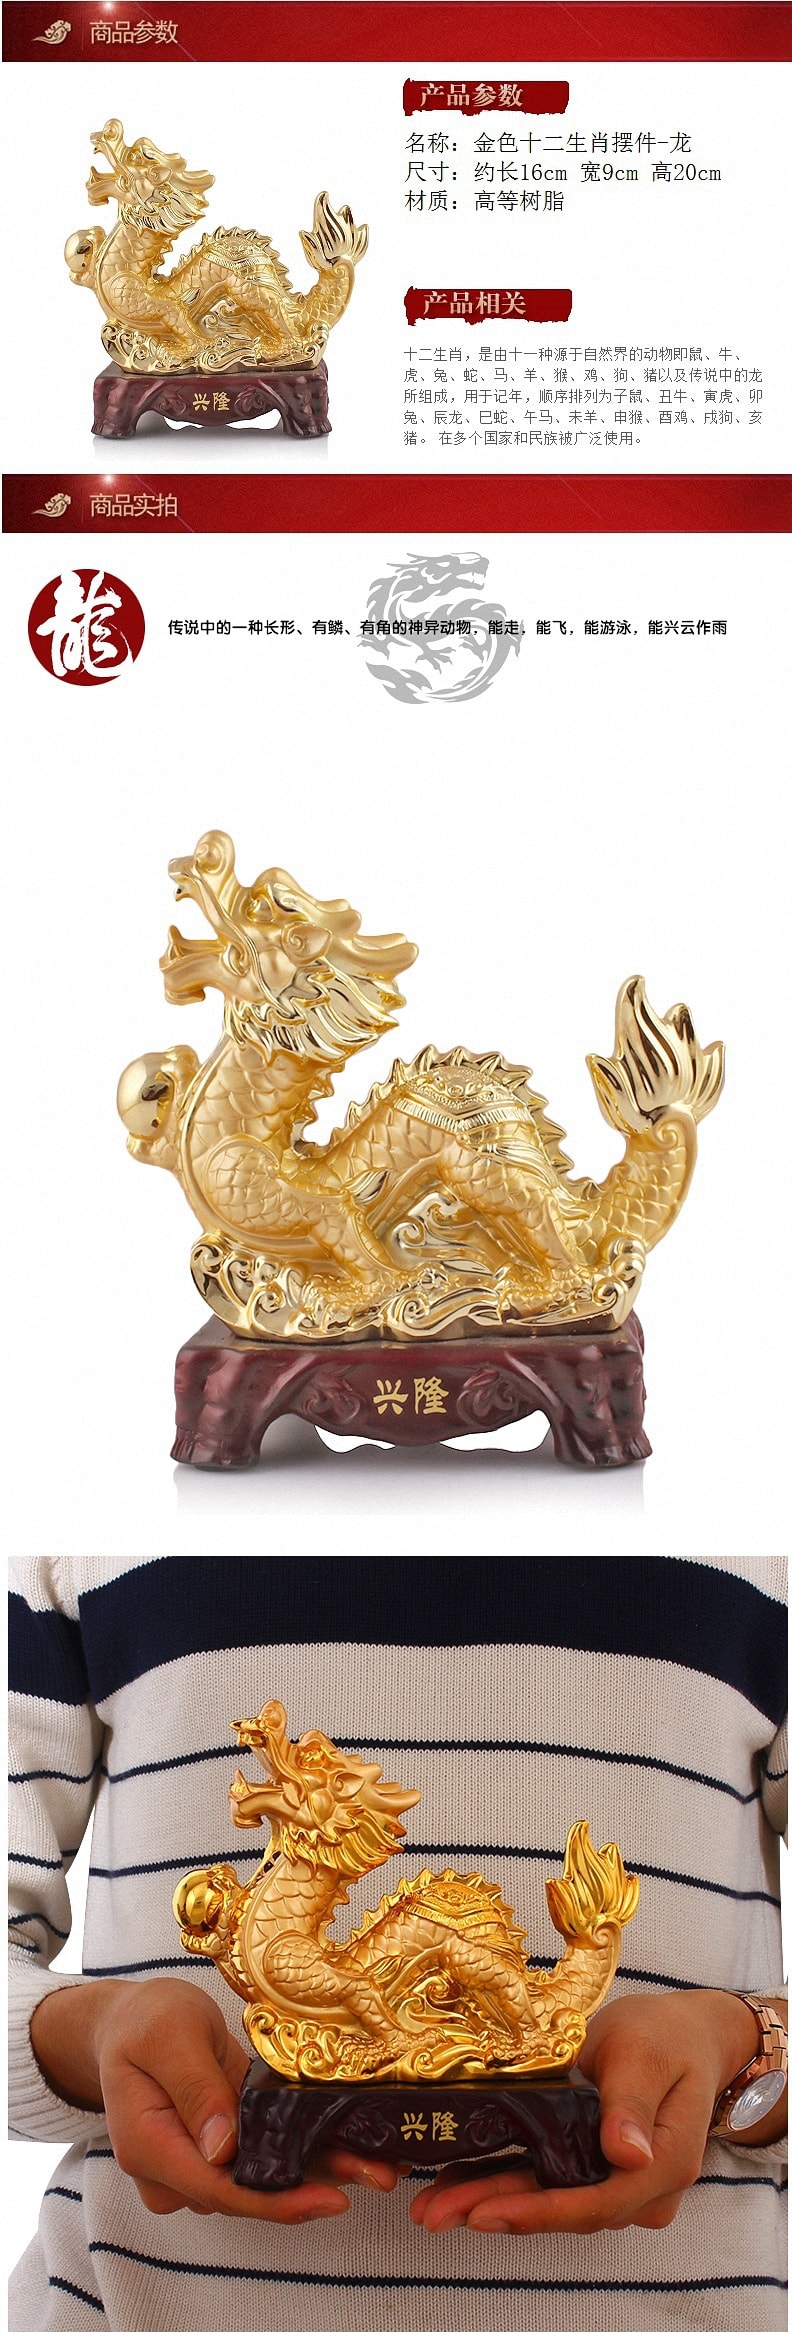 The Chinese Zodiac Dragon